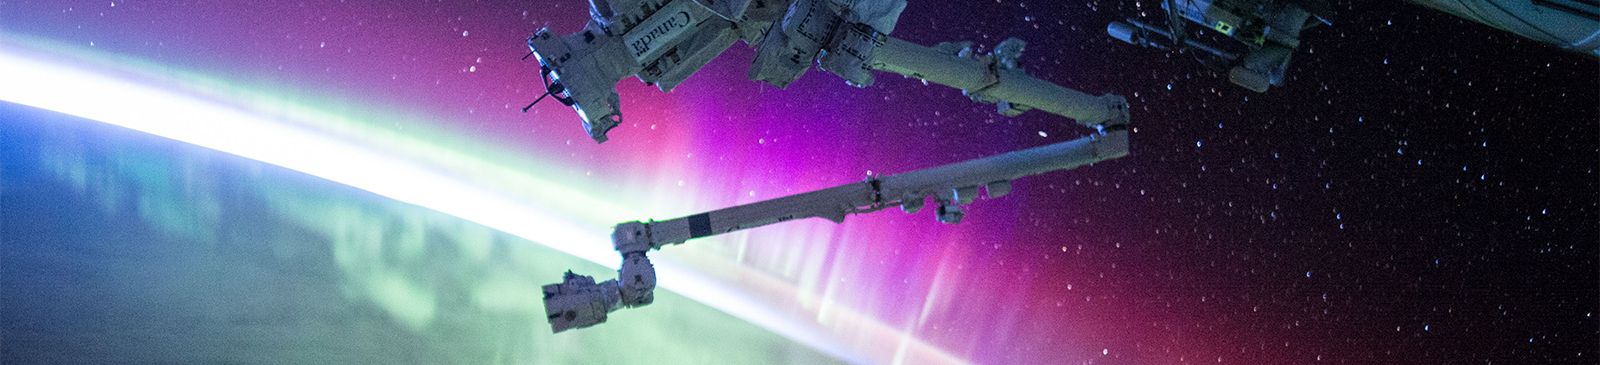 Robotarm in de ruimte - foto van NASA